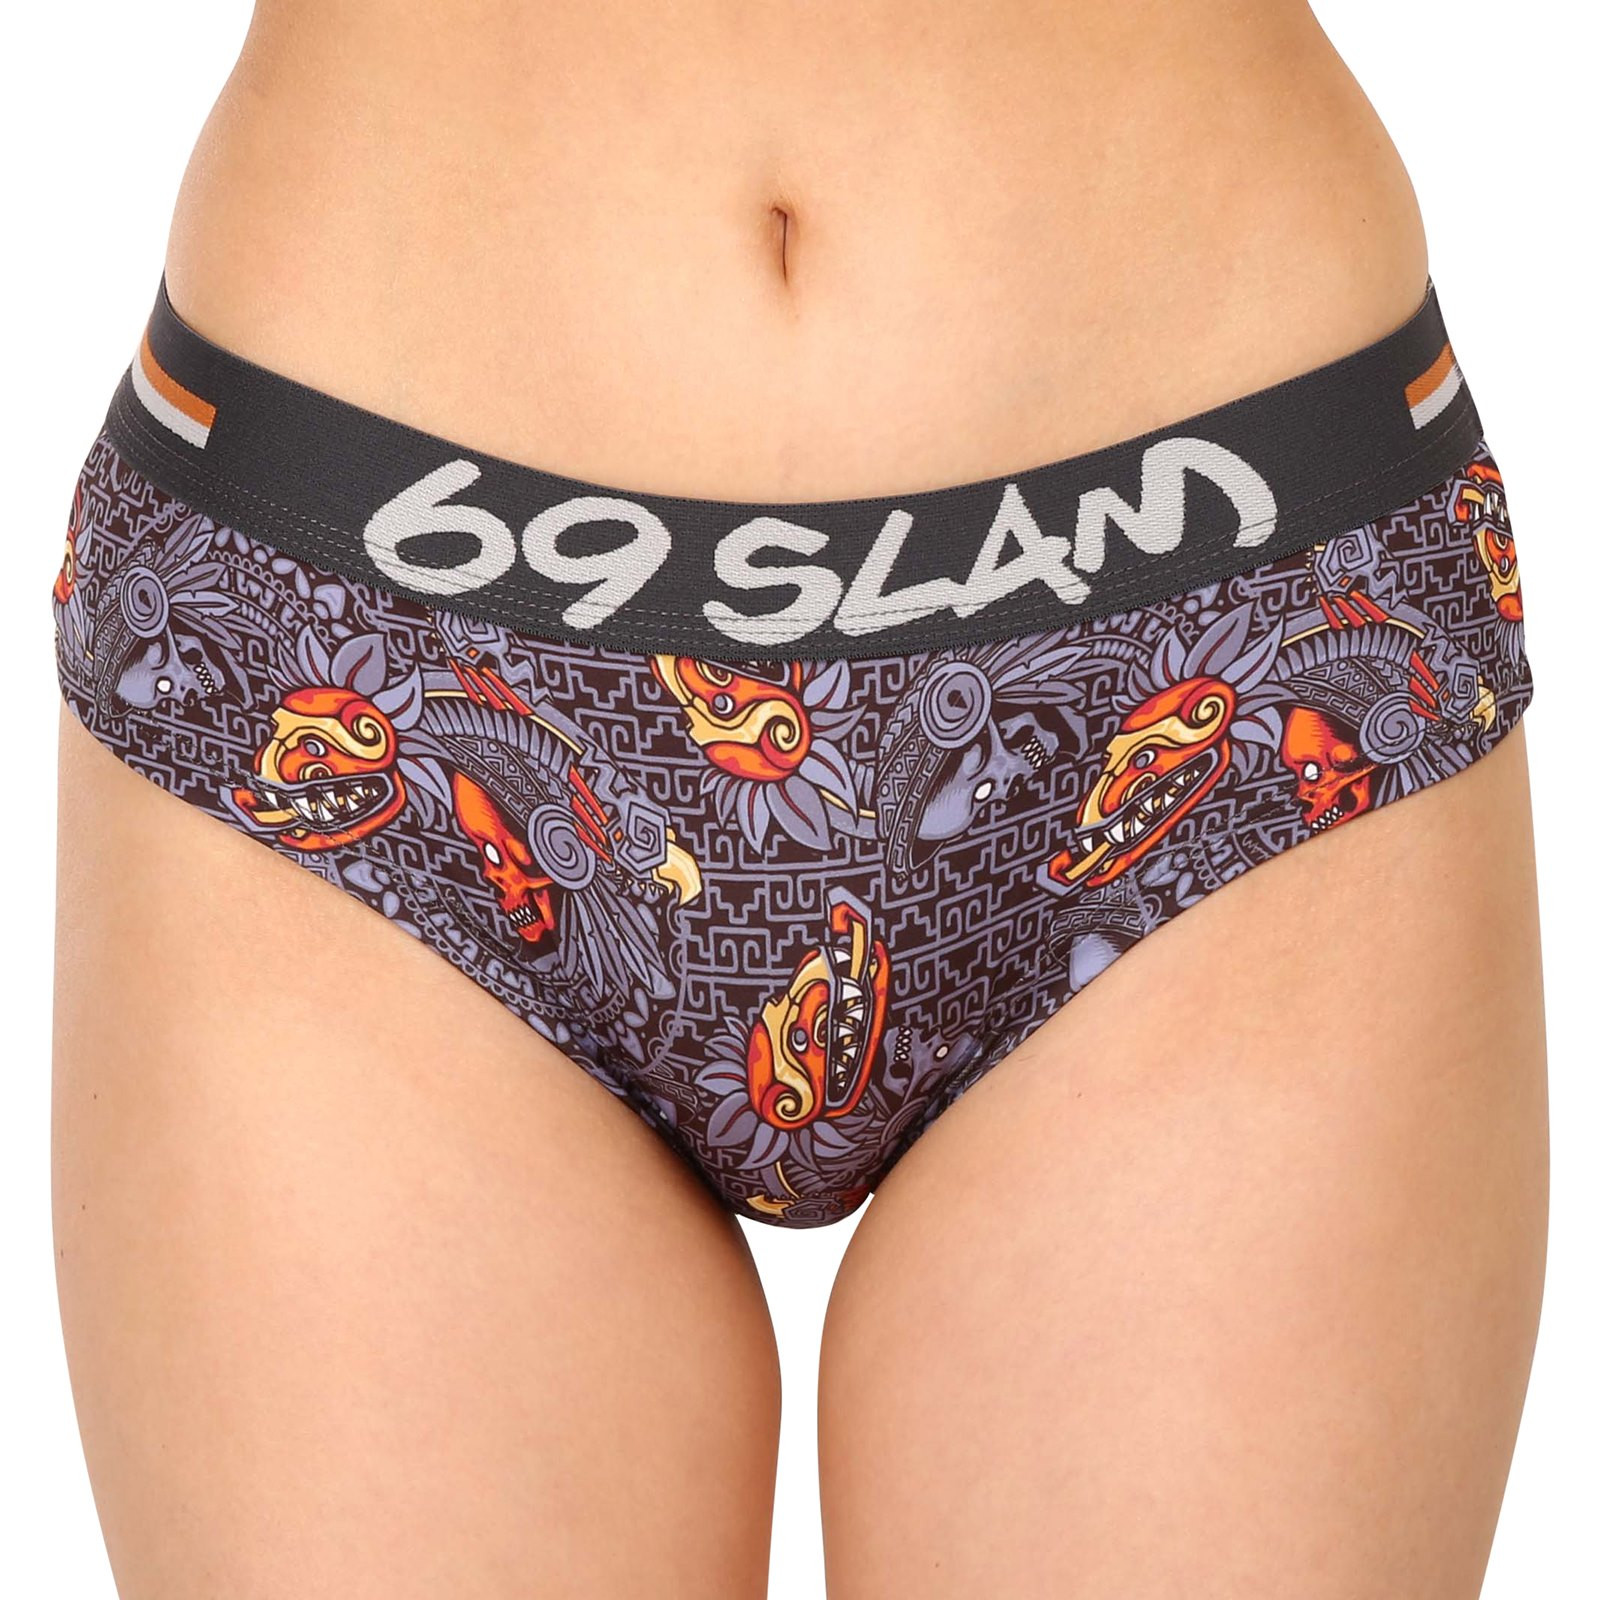 Women's panties 69SLAM mayan head luna